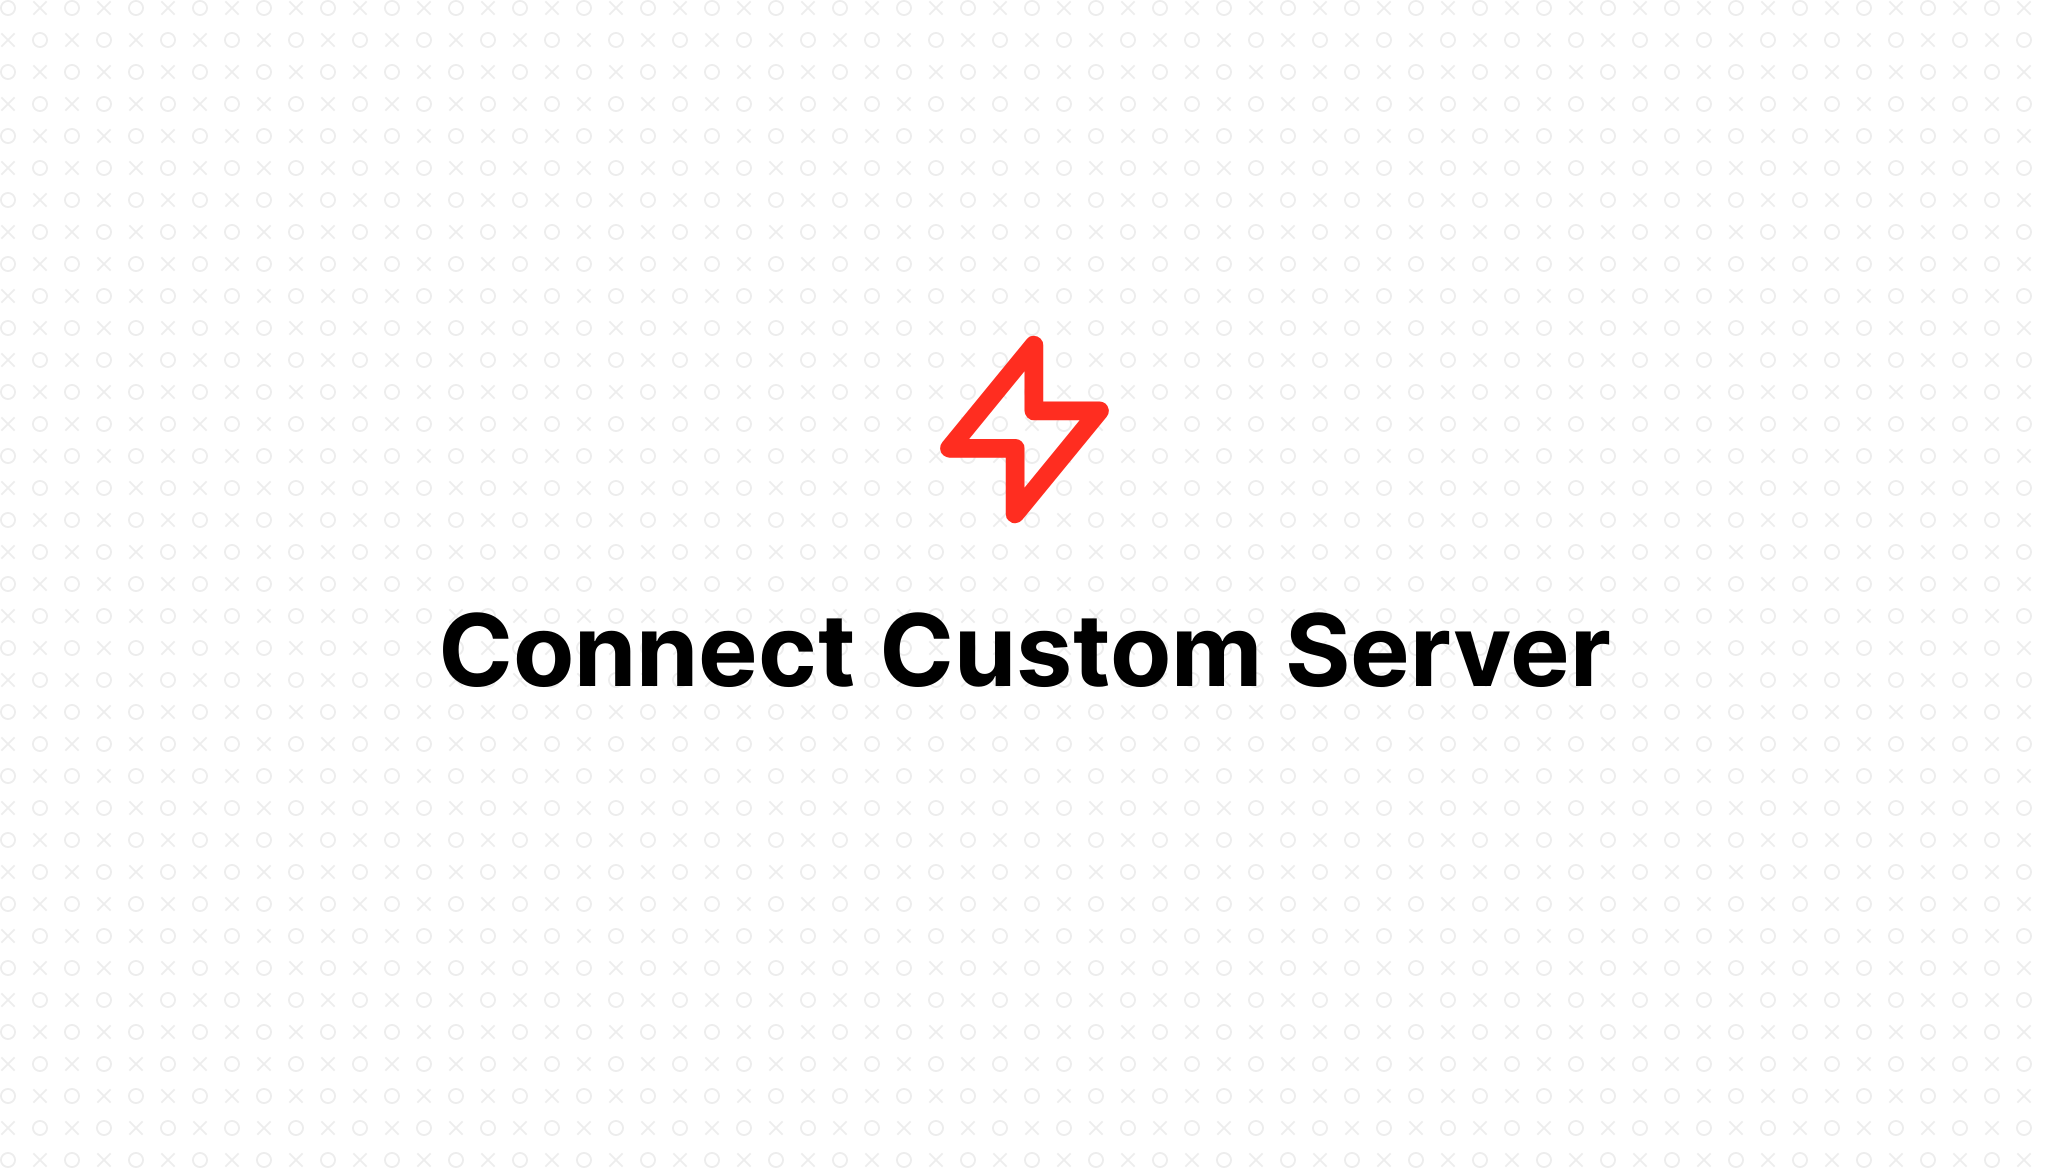 Connect Custom Server